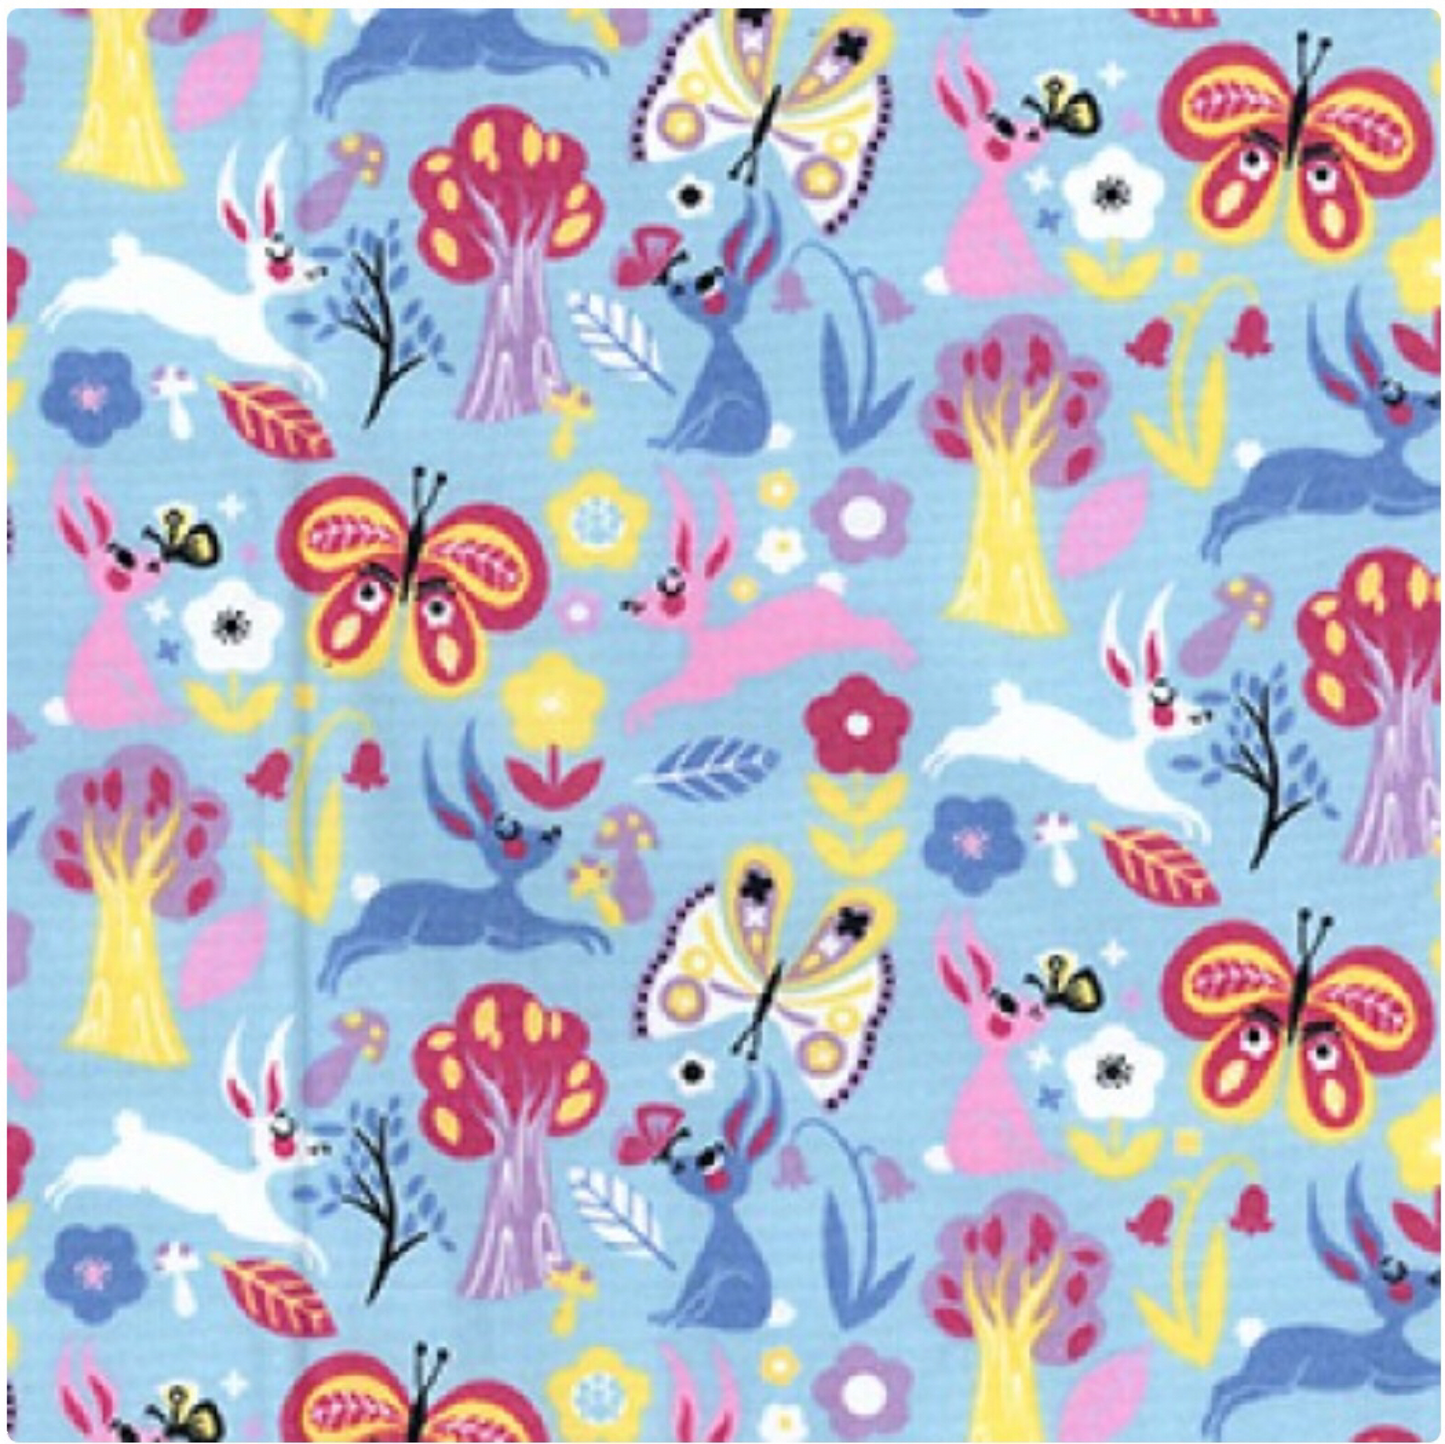 Bunnies and Butterflies on Blue 100% Cotton Fabric - Rosie's Craft Shop Ltd